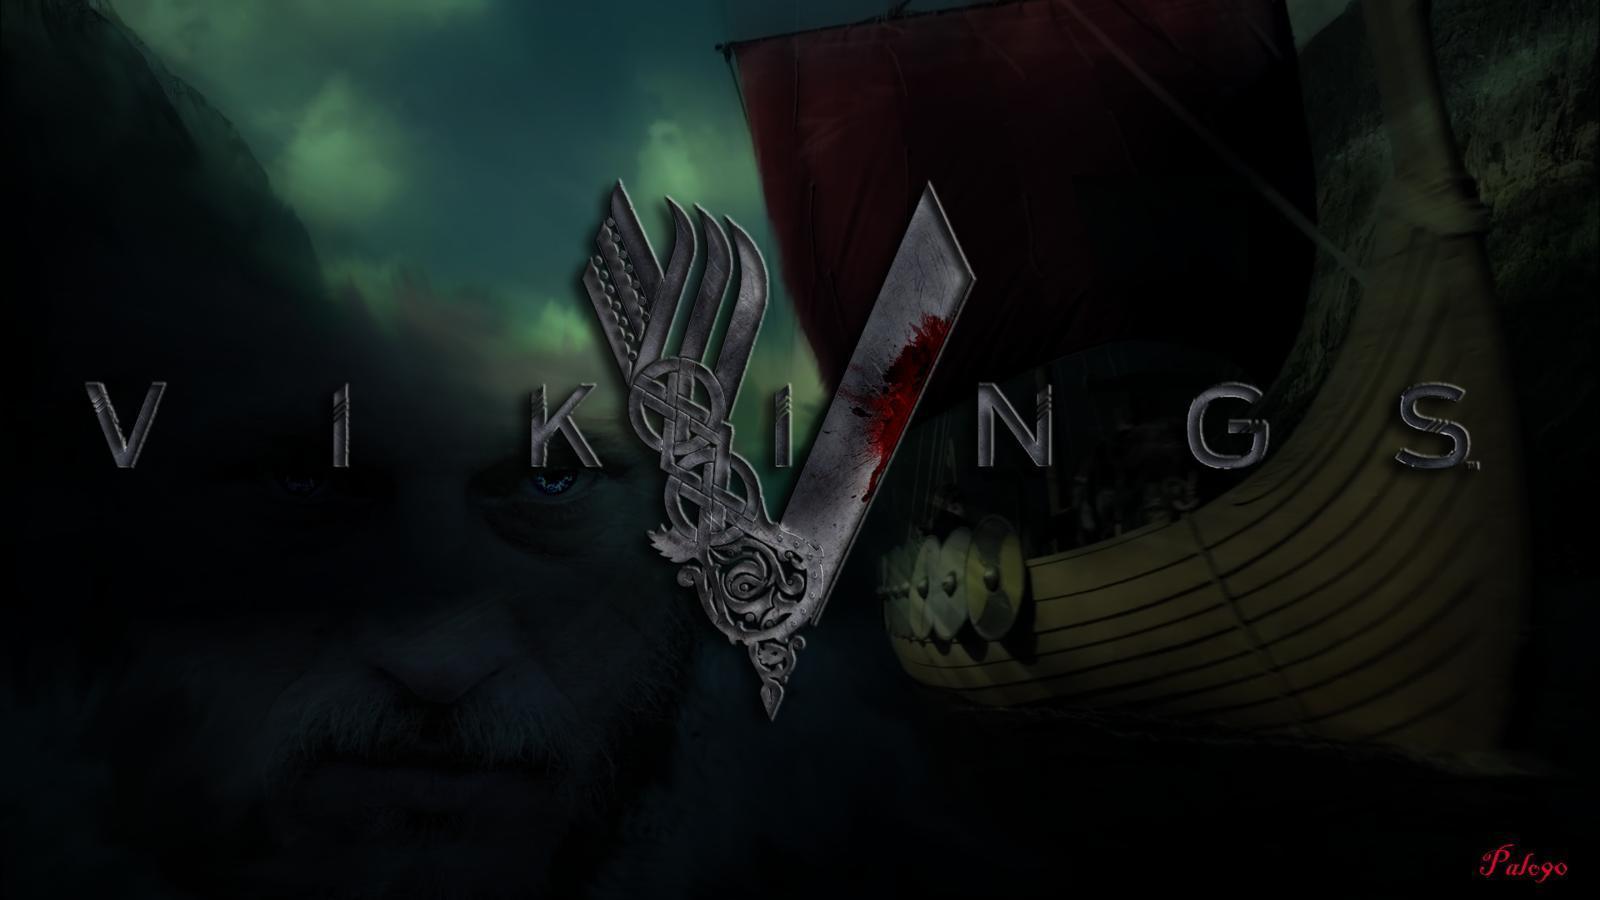 Vikings History Channel Wallpaper